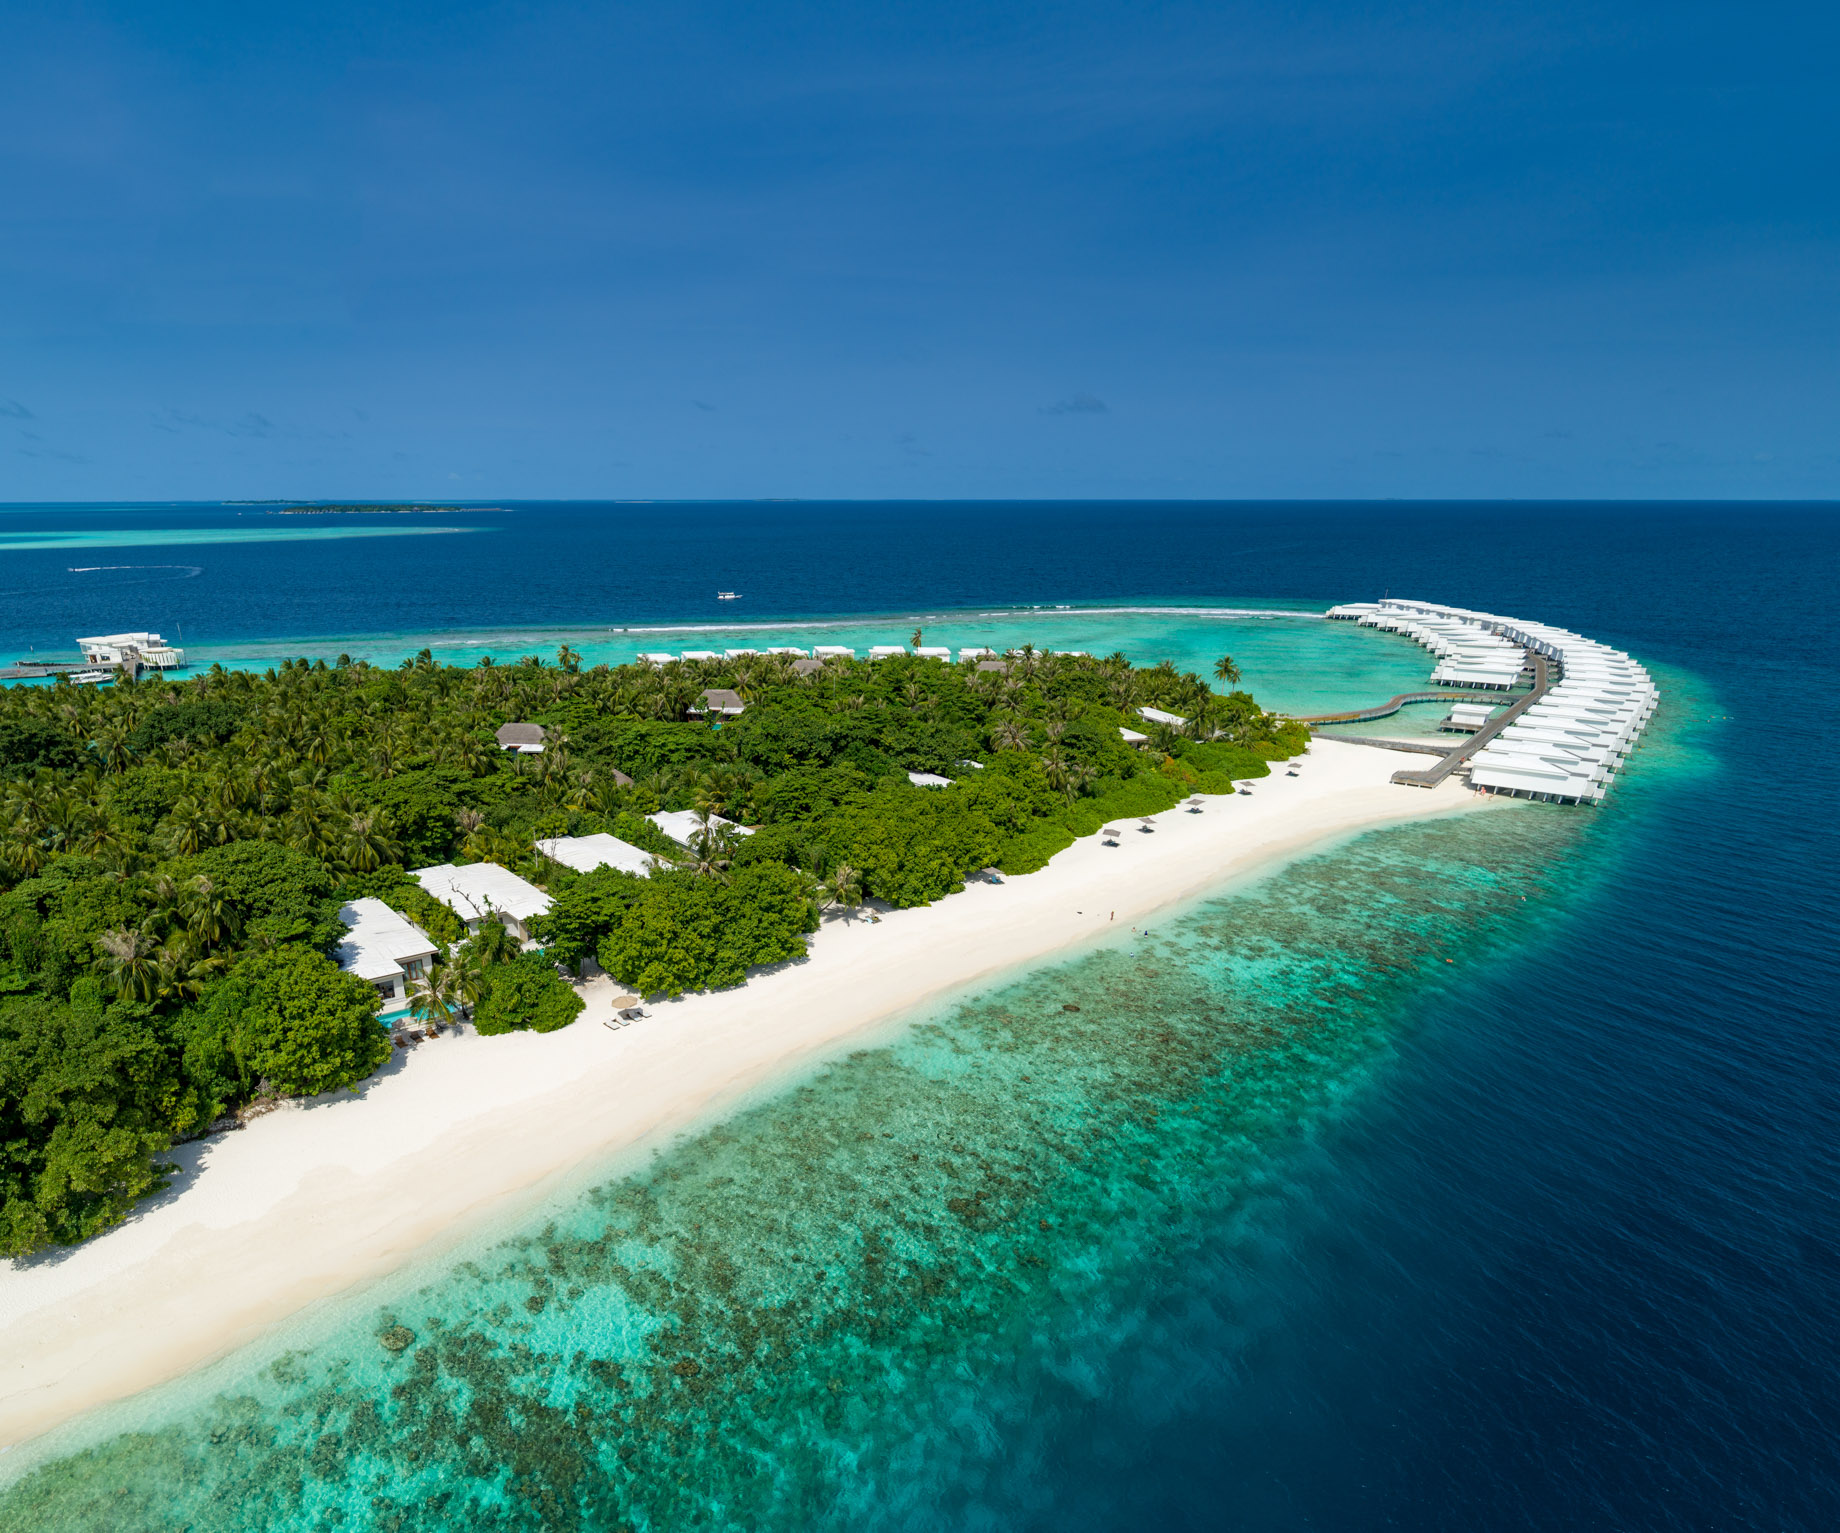 Amilla Fushi Resort and Residences - Baa Atoll, Maldives - Ocean Beach Houses Aerial